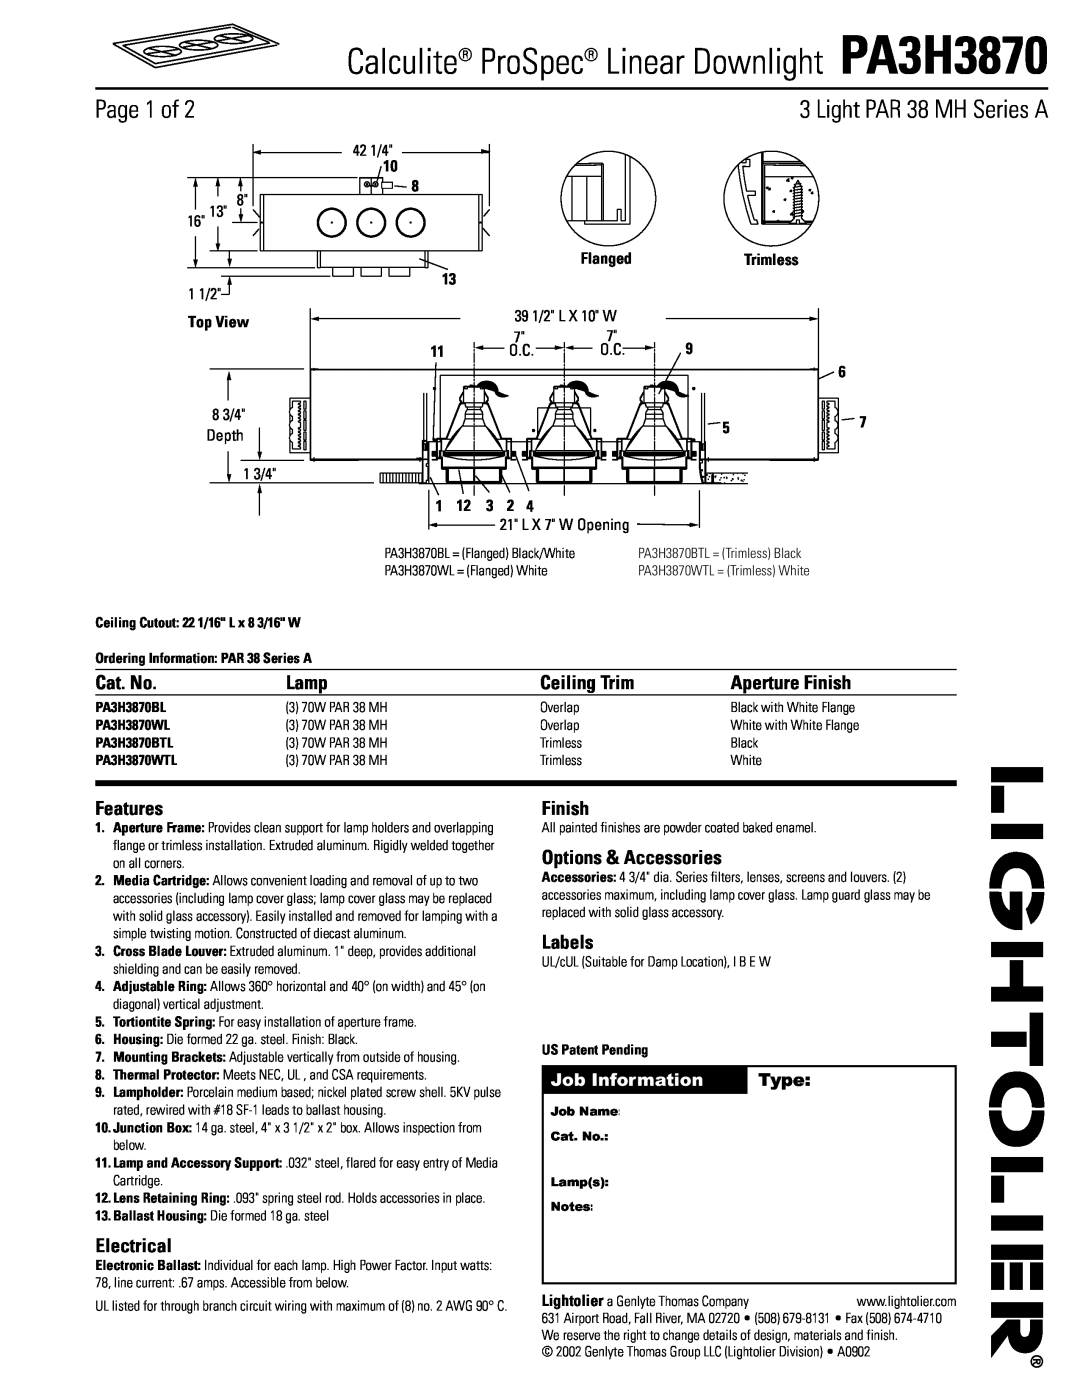 Lightolier PA3H3870 manual Page 1 of, Light PAR 38 MH Series A, Cat. No, Lamp, Ceiling Trim, Aperture Finish, Features 